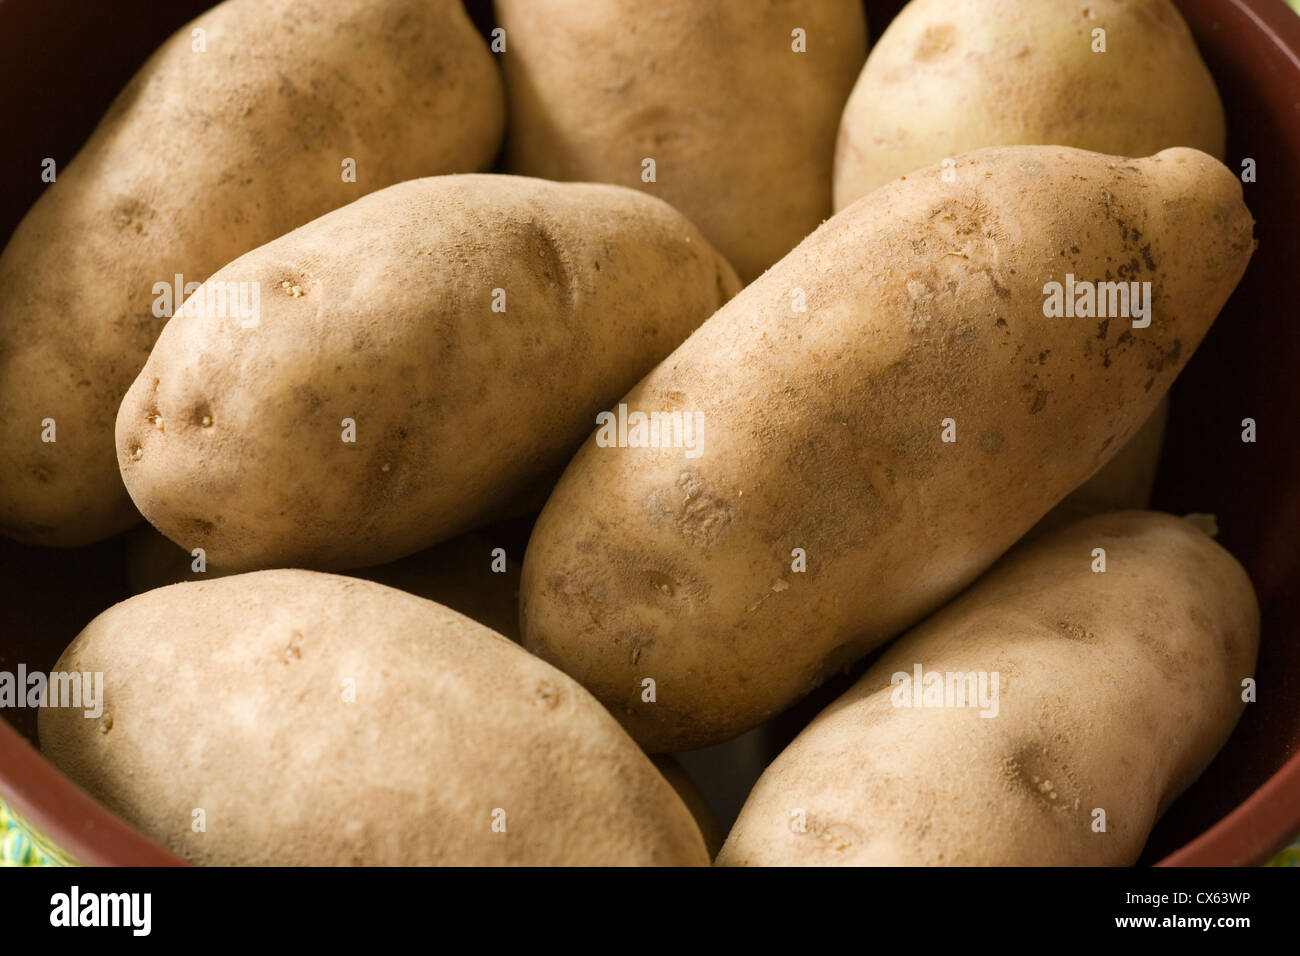 whole, raw, russet potatoes Stock Photo